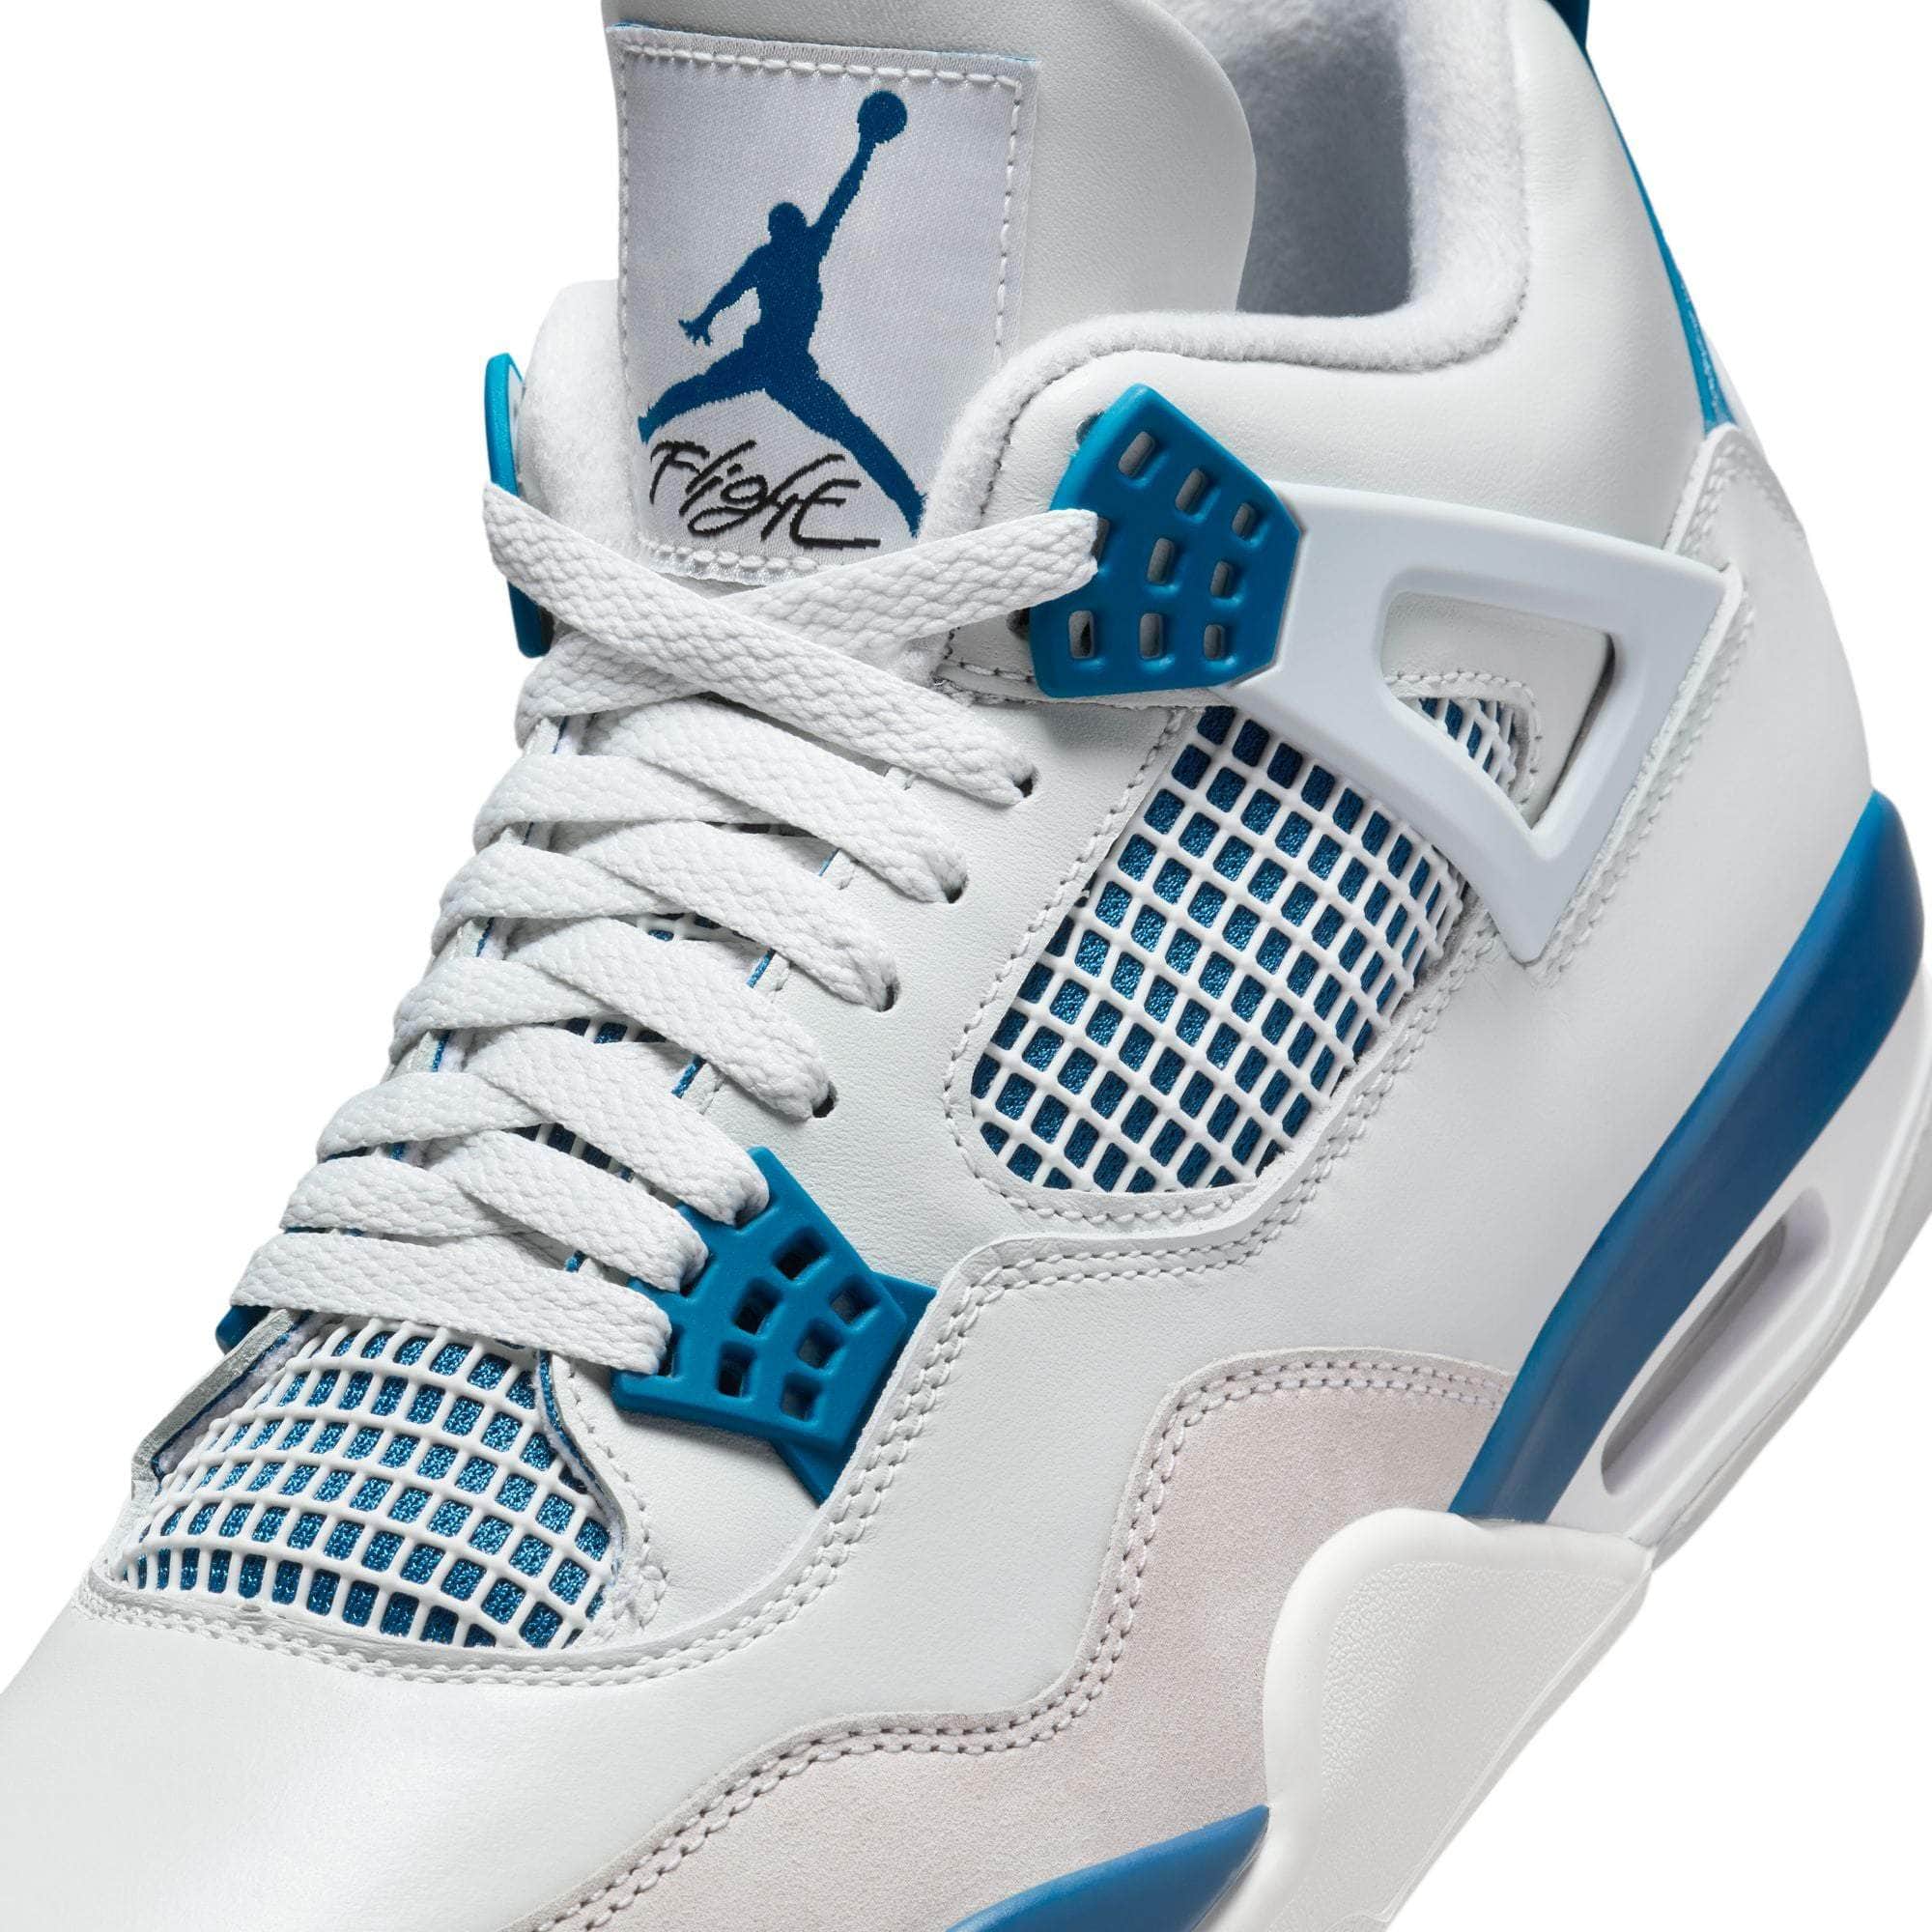 Air Jordan Footwear Air Jordan 4 Retro "Military Blue" - Men's